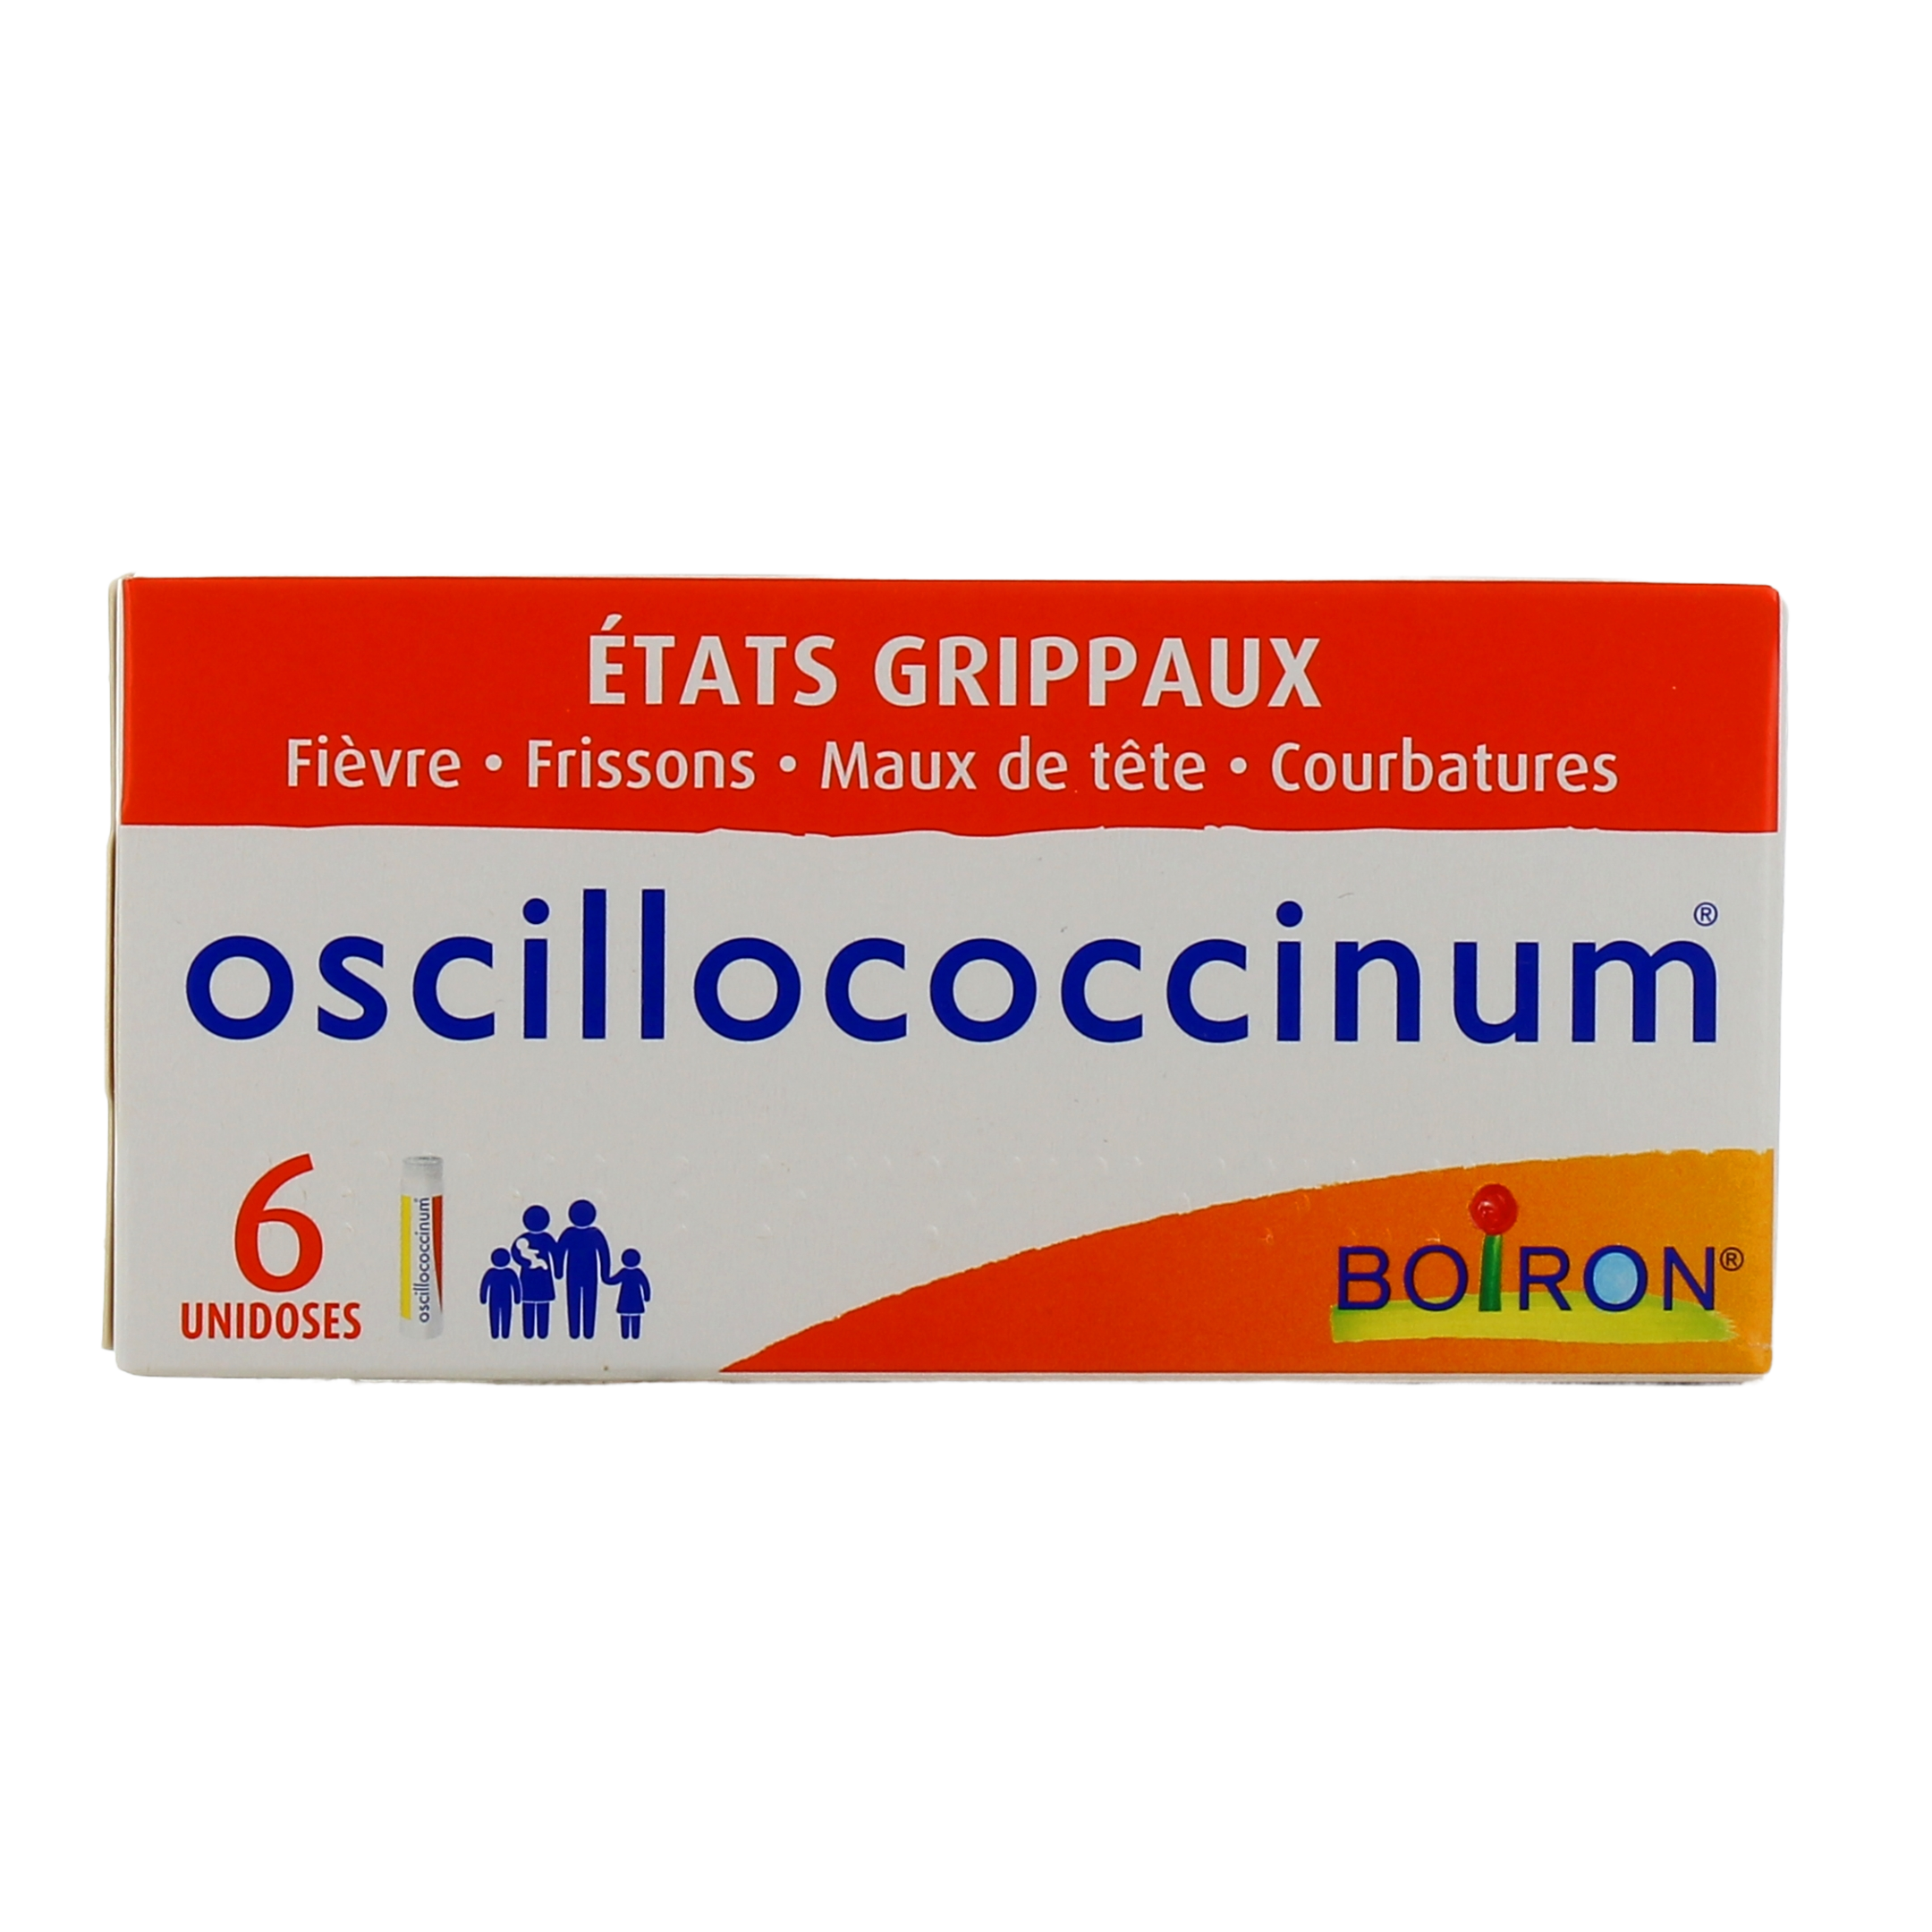 Oscillococcinum - Etats grippaux